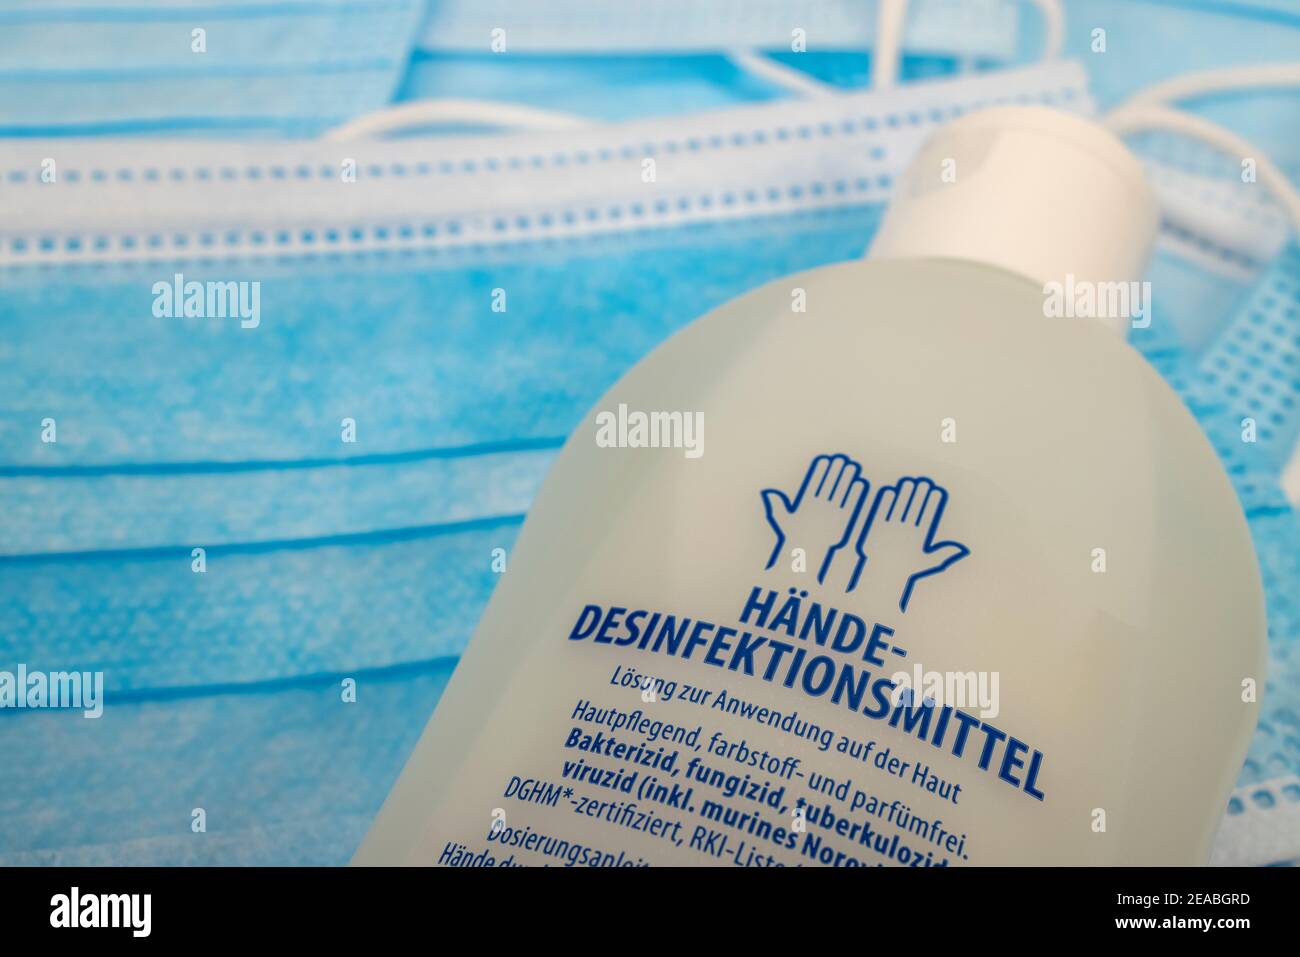 Hand disinfectant lies on blue mouth nasal protective masks, detail, symbol photo, coronavirus, Stock Photo